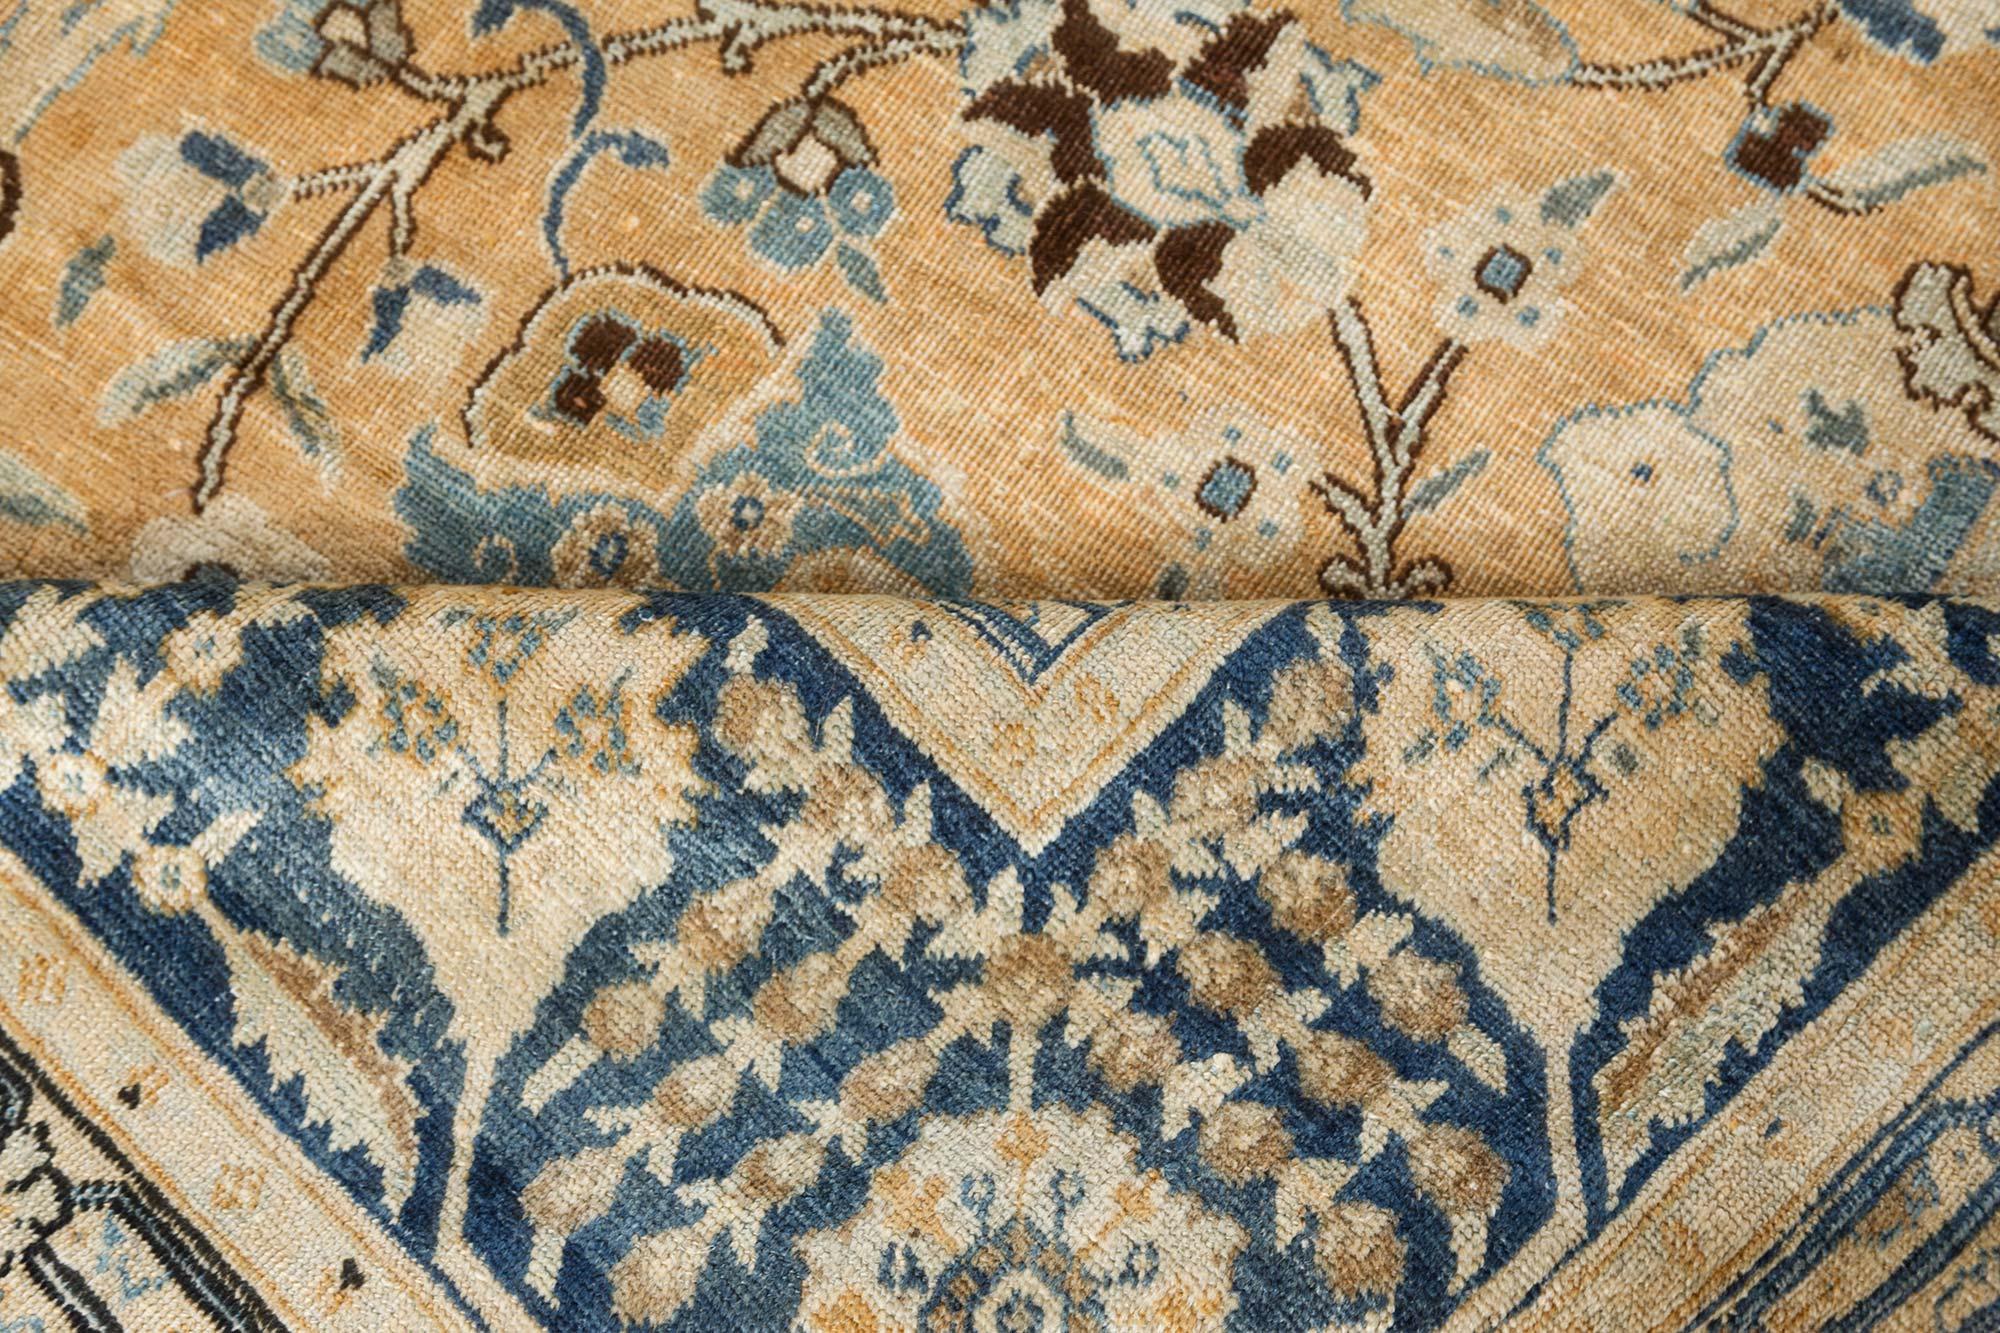 Fine Antique Persian Tabriz handmade wool rug by Doris Leslie Blau
Size: 11'5